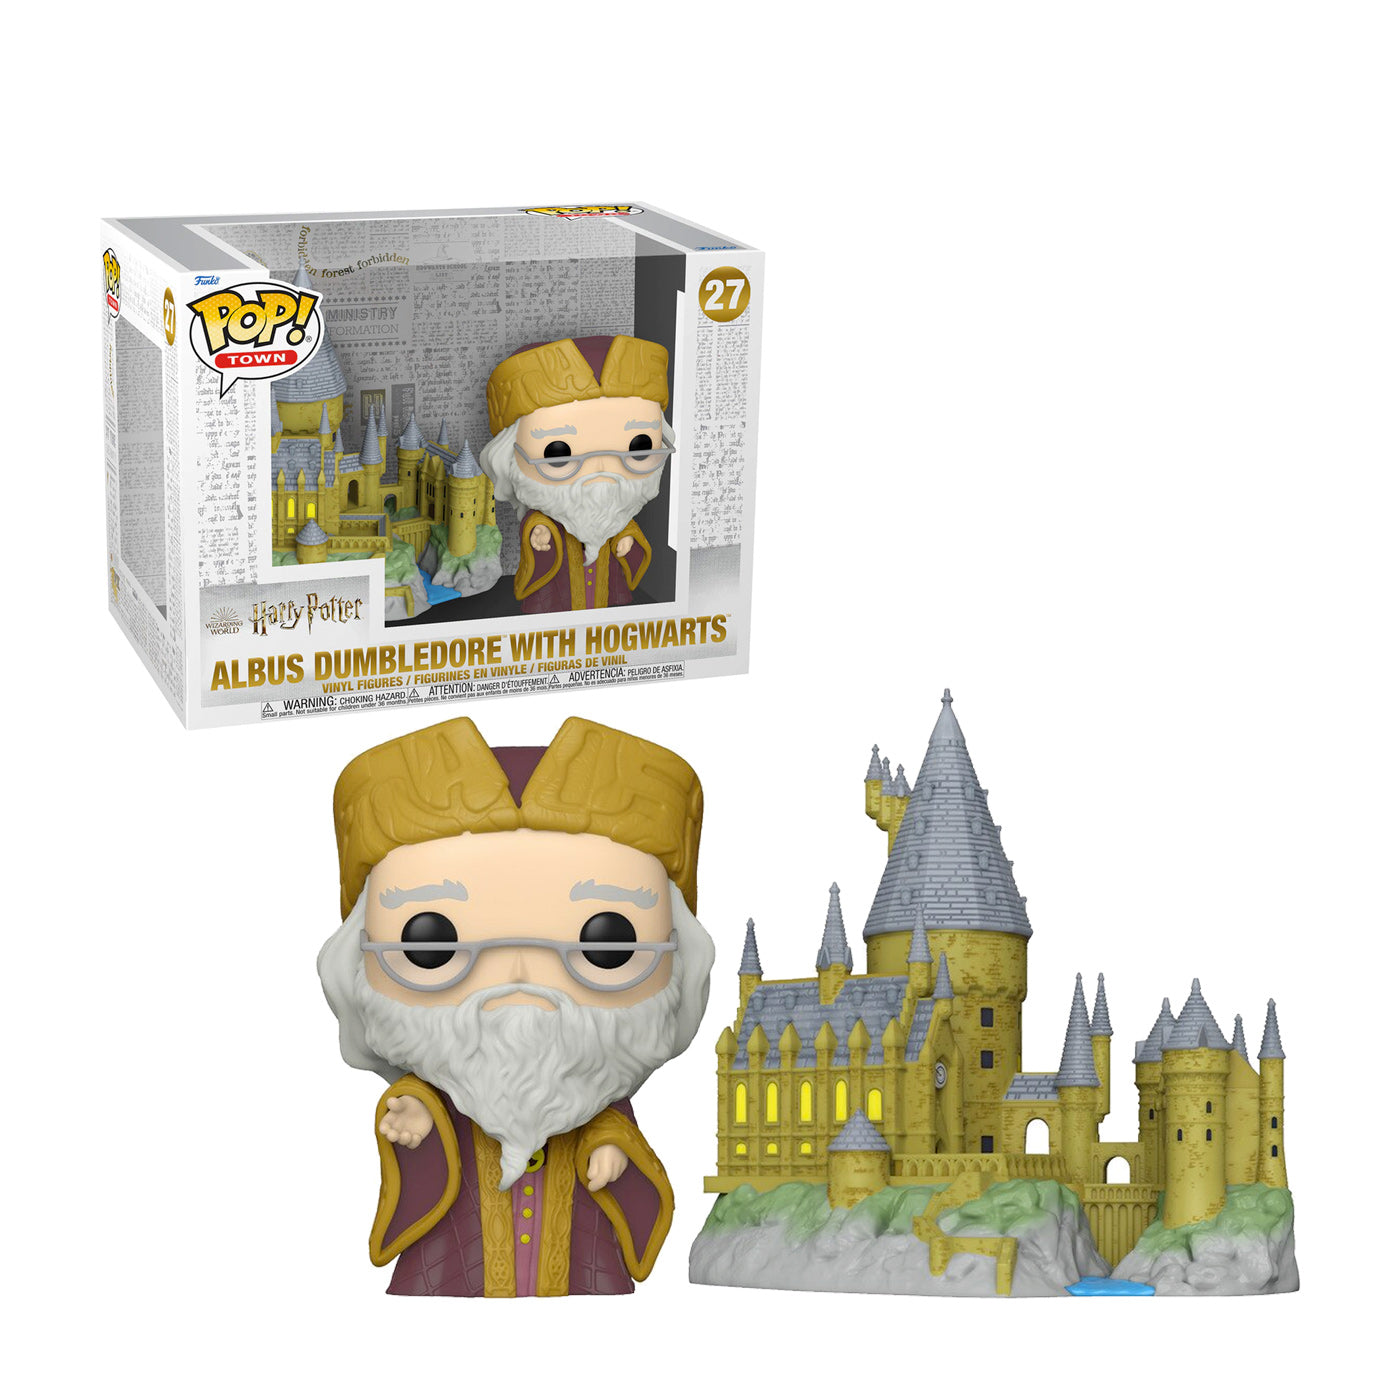 Funko Pop: Albus Dumbledore With Hogwarts (27)